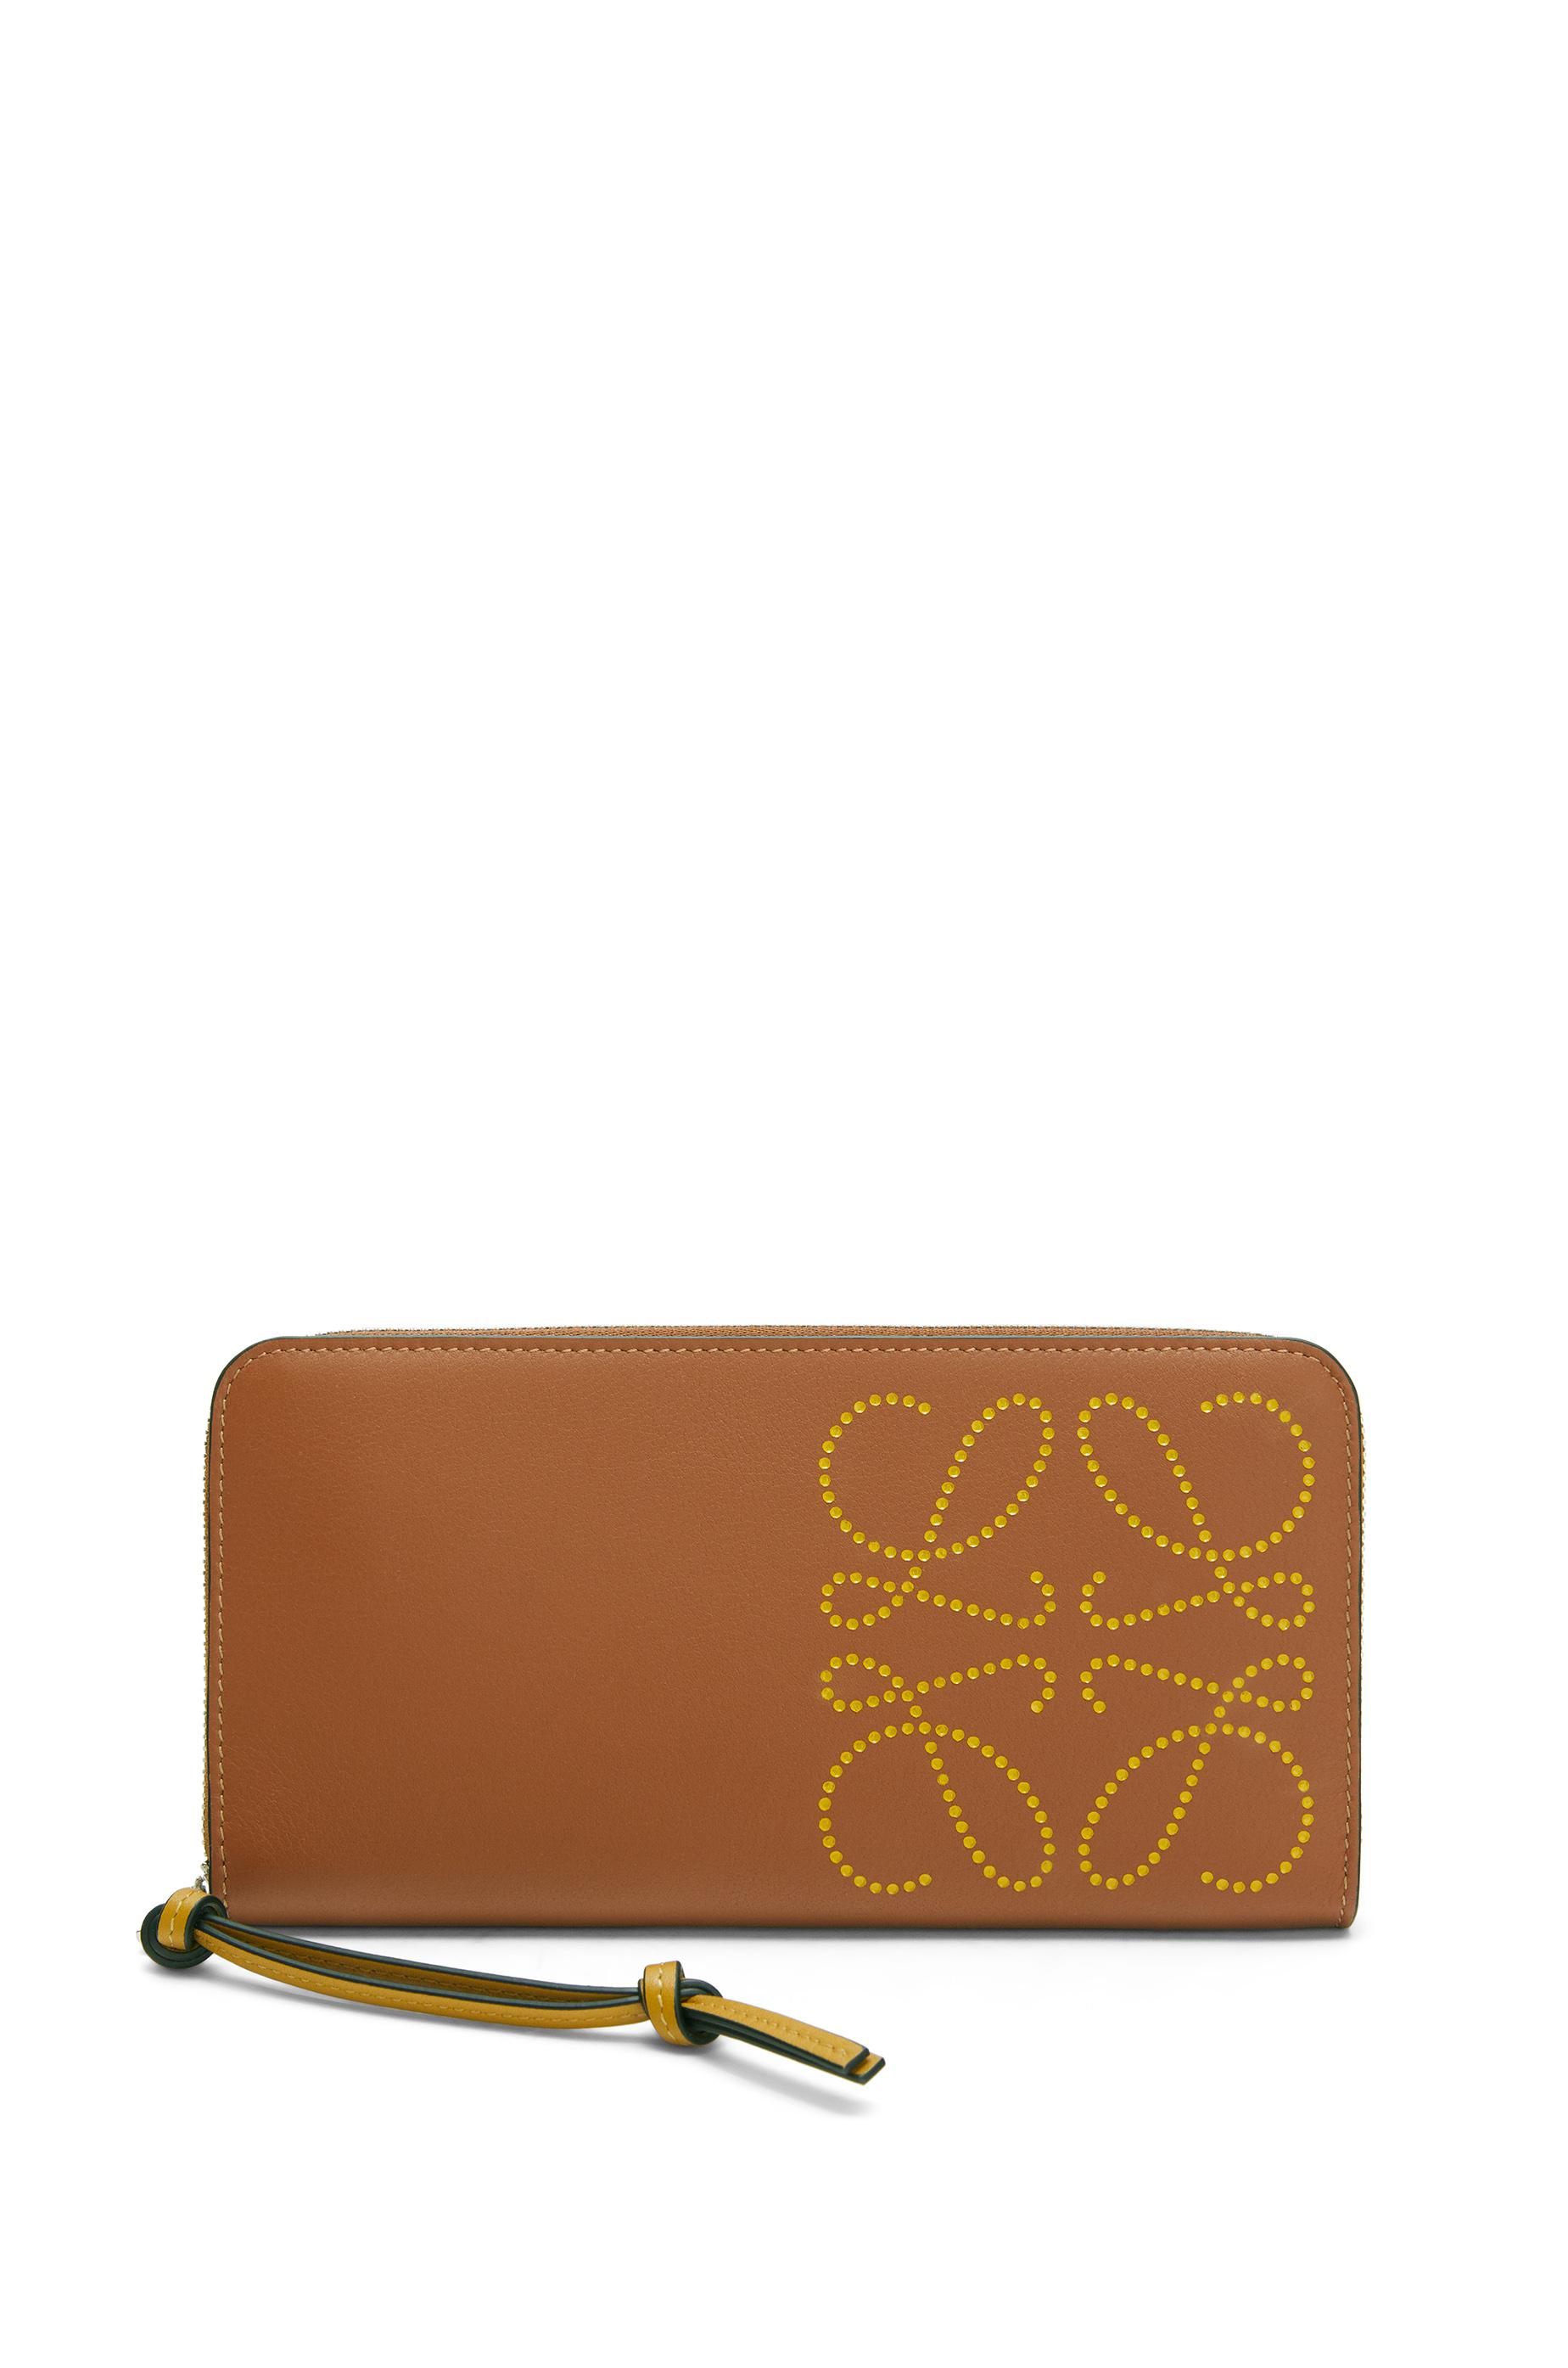 Brand zip around wallet in classic calfskin by LOEWE